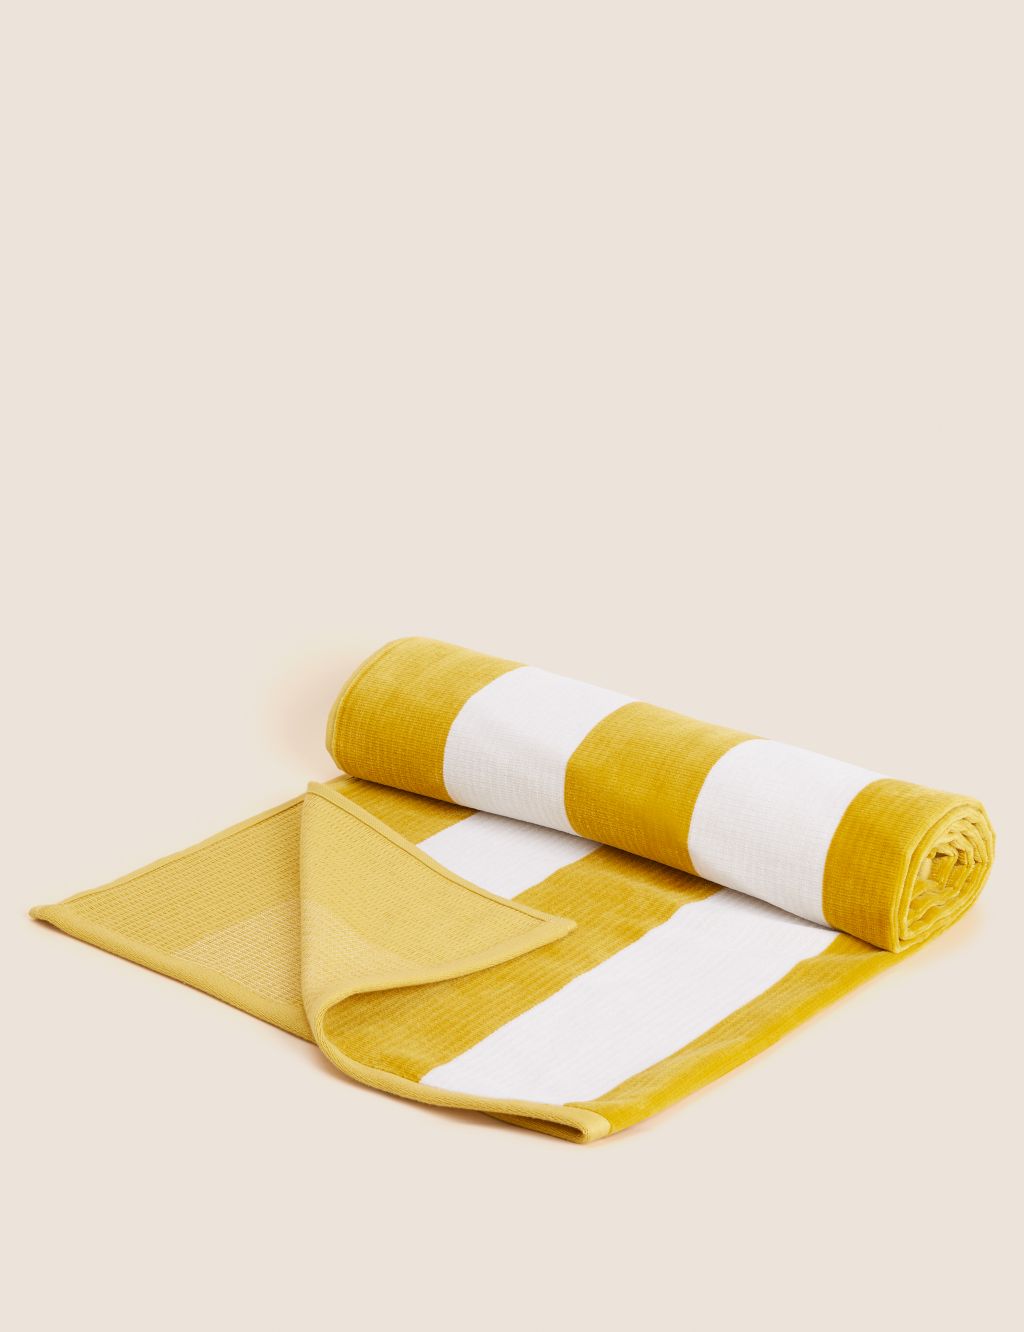 Pure Cotton Sand Resistant Striped Beach Towel image 4